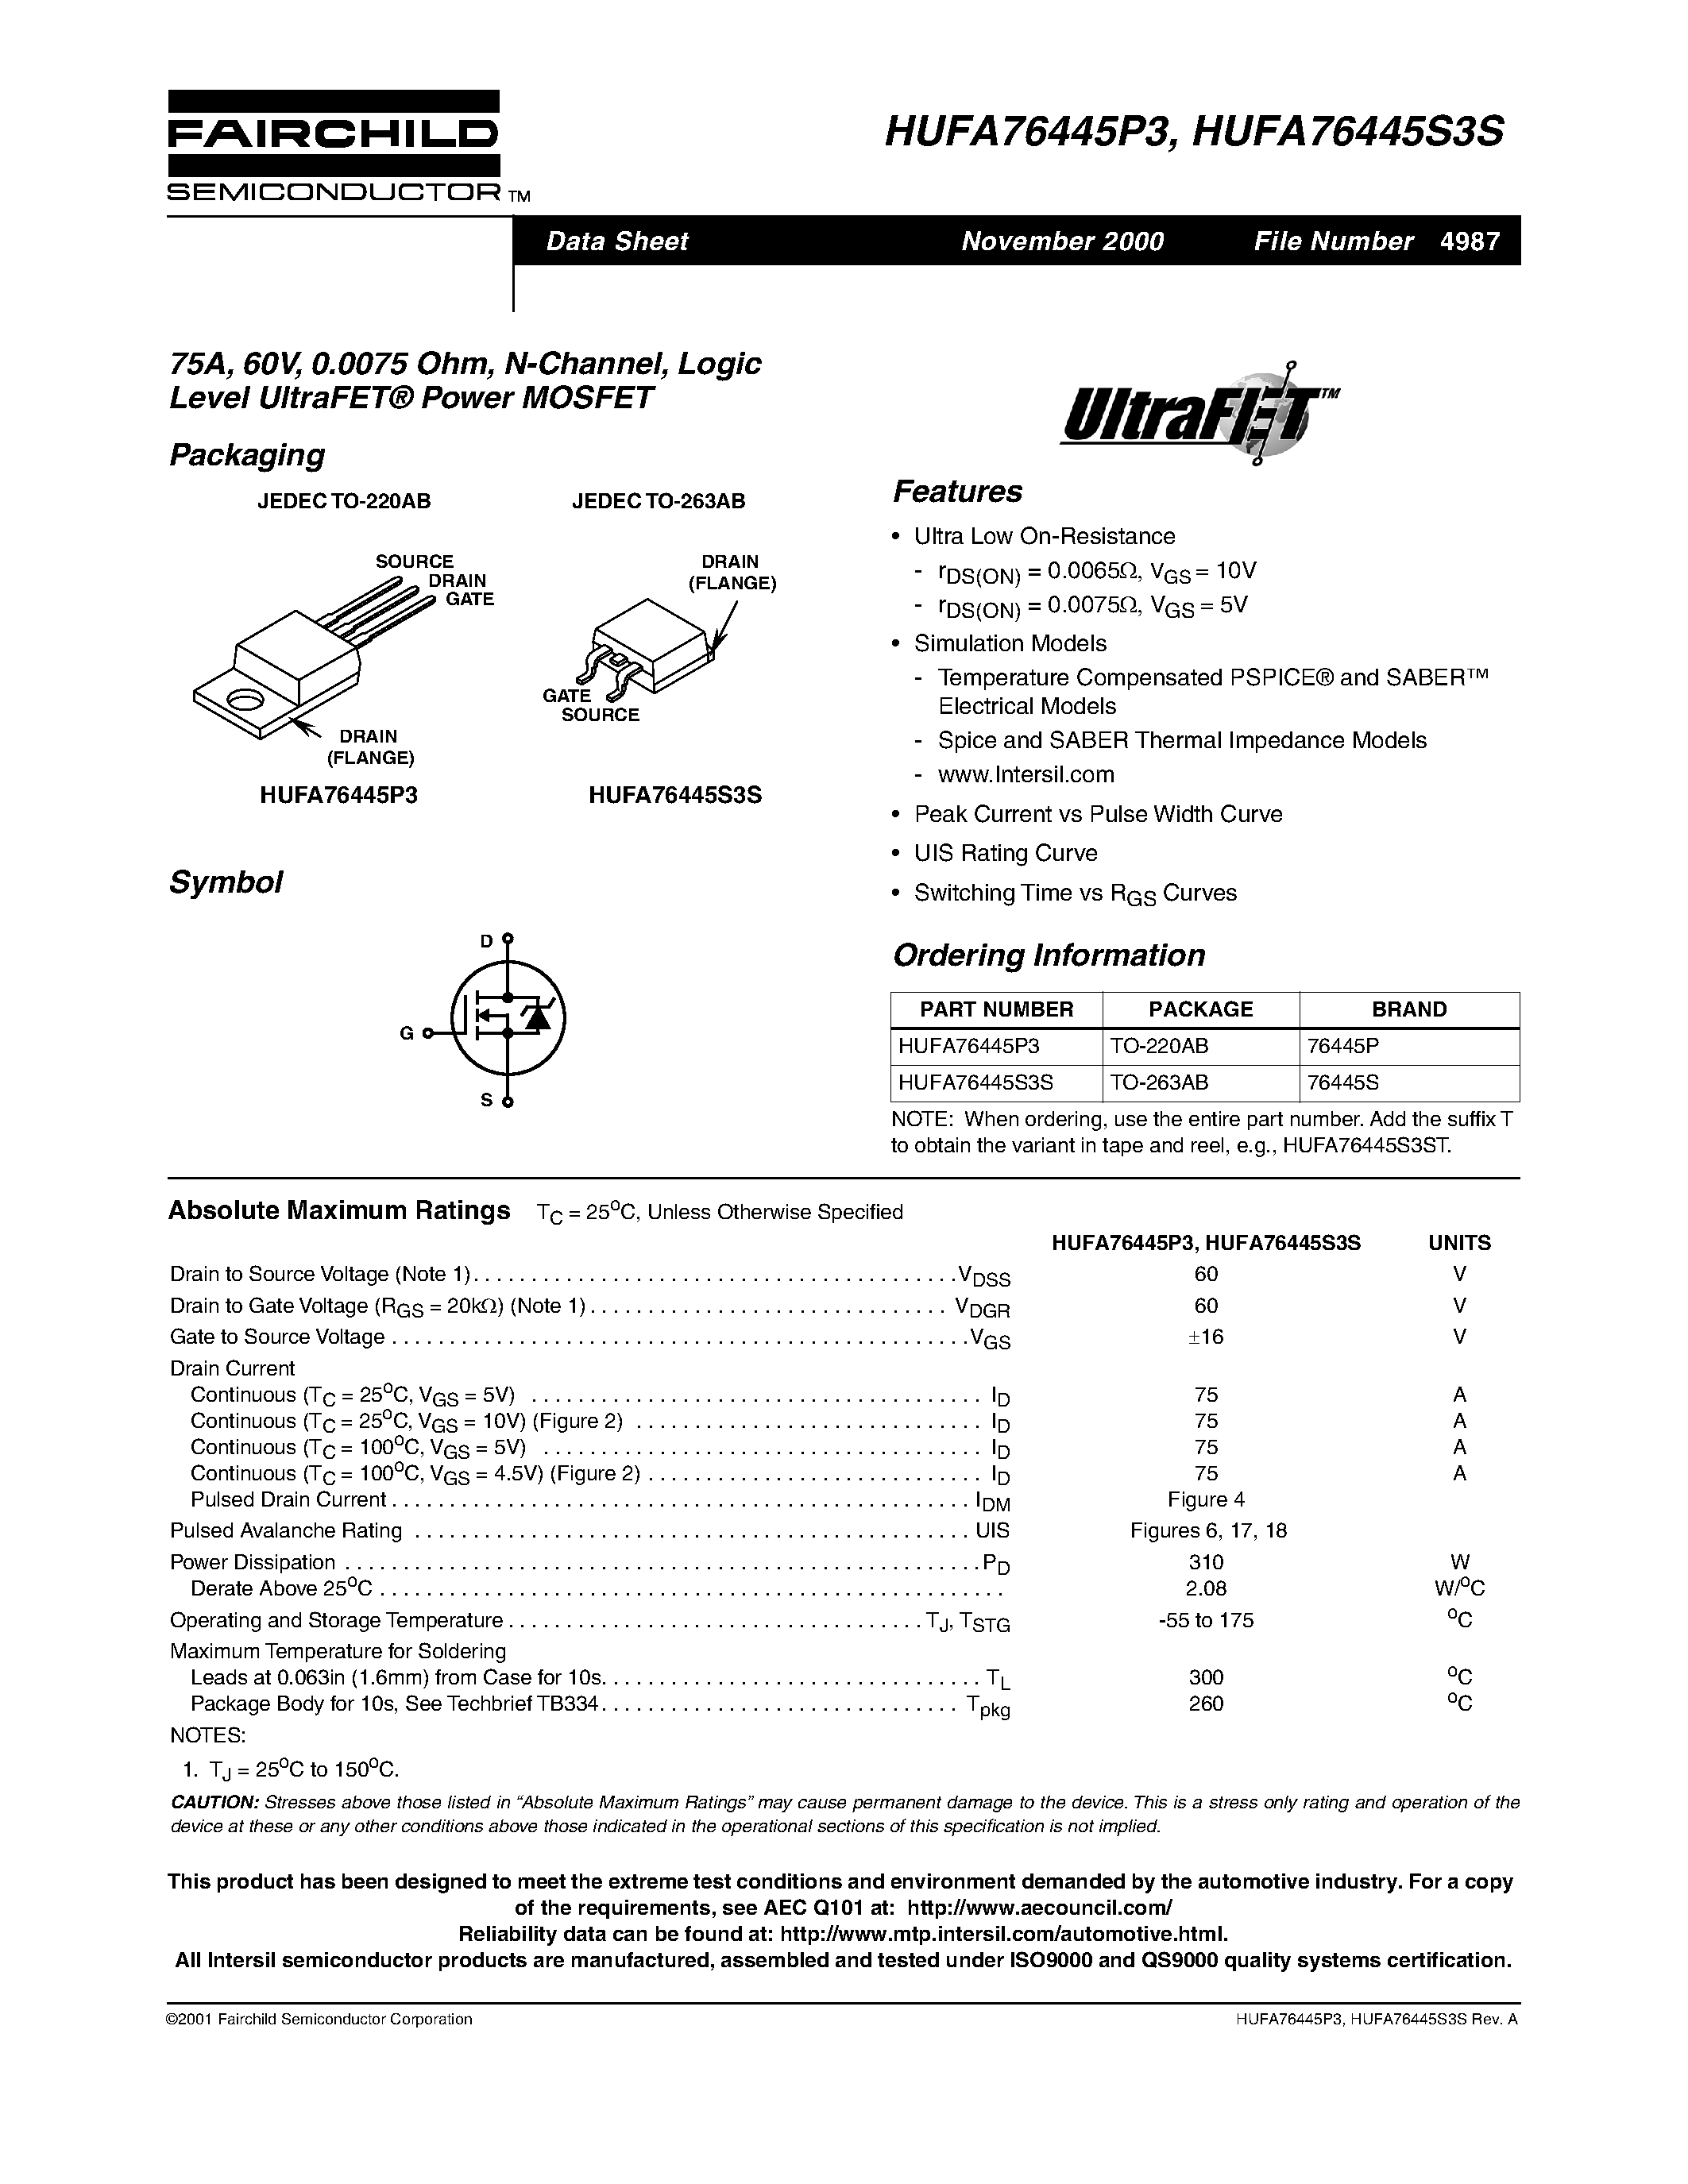 Даташит HUFA76445S3S - 75A/ 60V/ 0.0075 Ohm/ N-Channel/ Logic Level UltraFET Power MOSFET страница 1